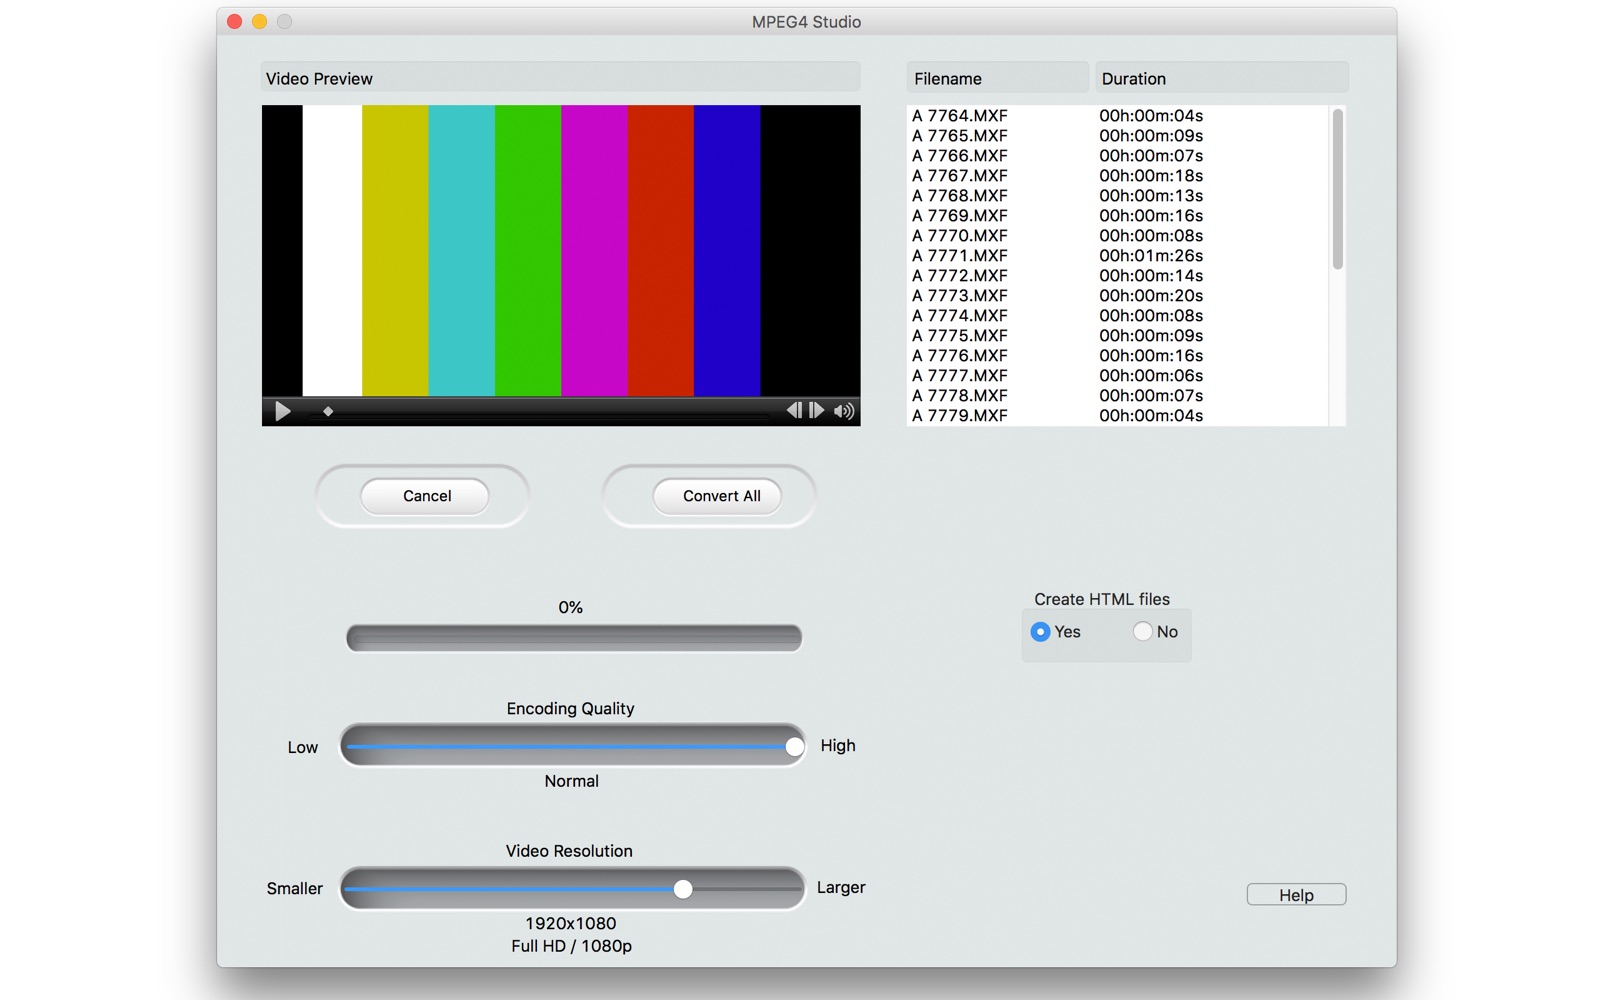 MPEG4 Video Studio 1.0 : Main Window